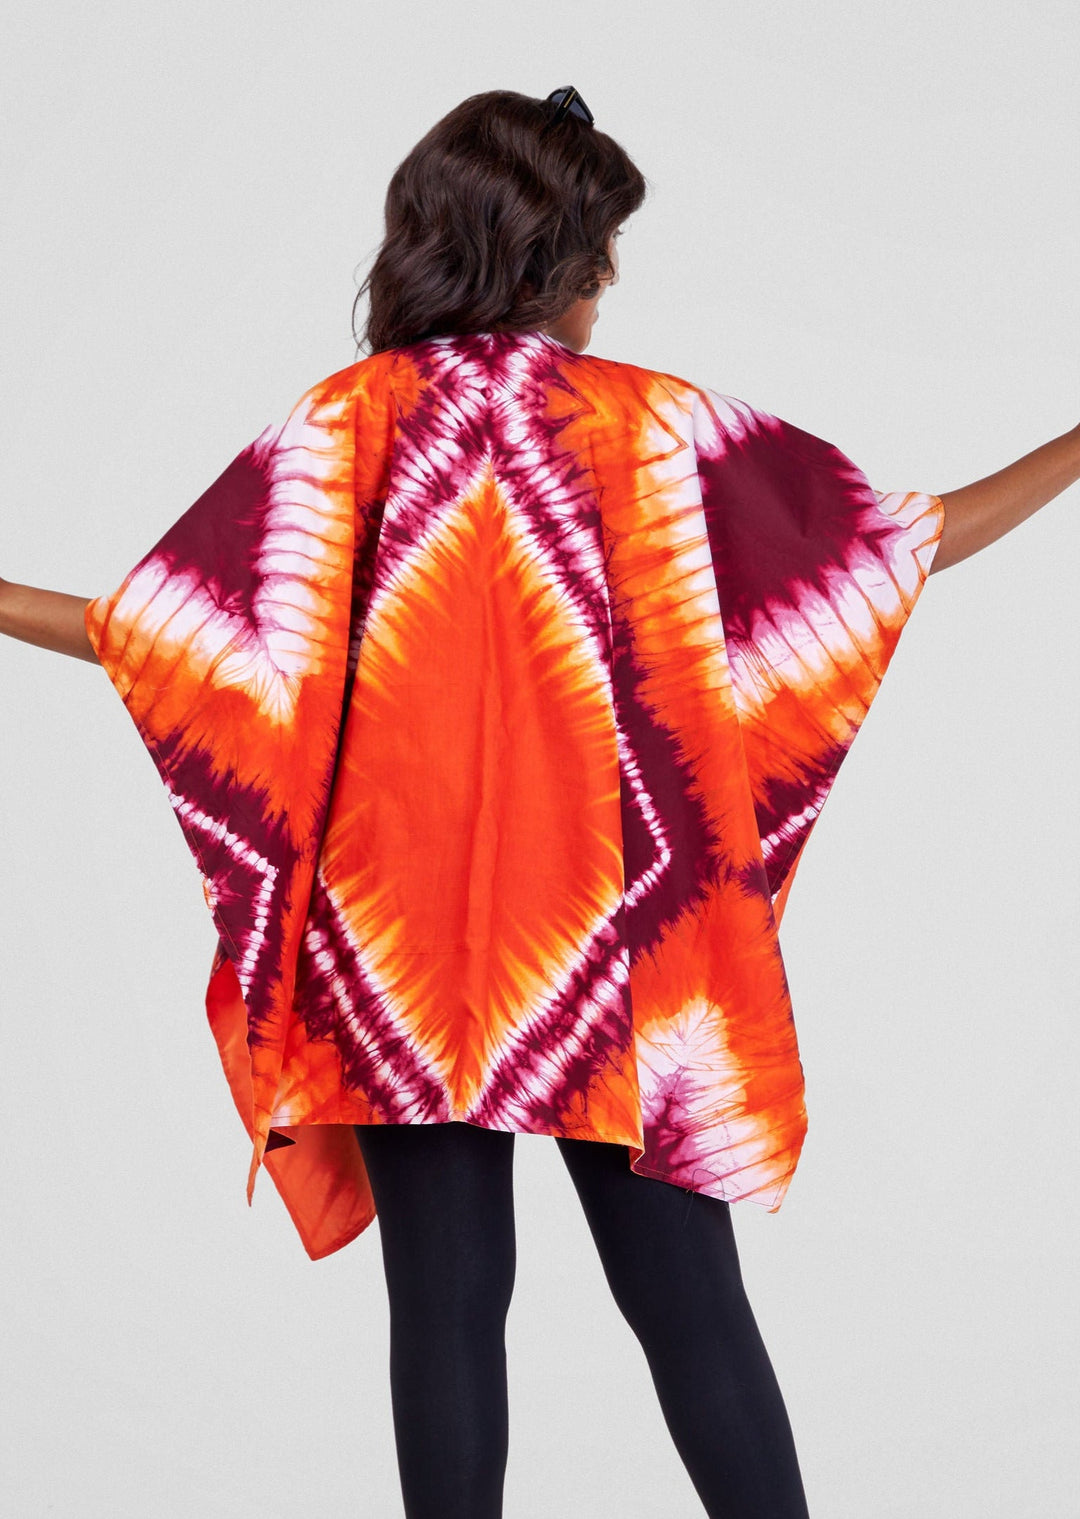 Leuchtendes Cape ‚Dye hard‘ - mikono.africa Jacken aus Kenia bunte Bomberjacke Partyjacke faire sozial nachhaltig designed in Kenia